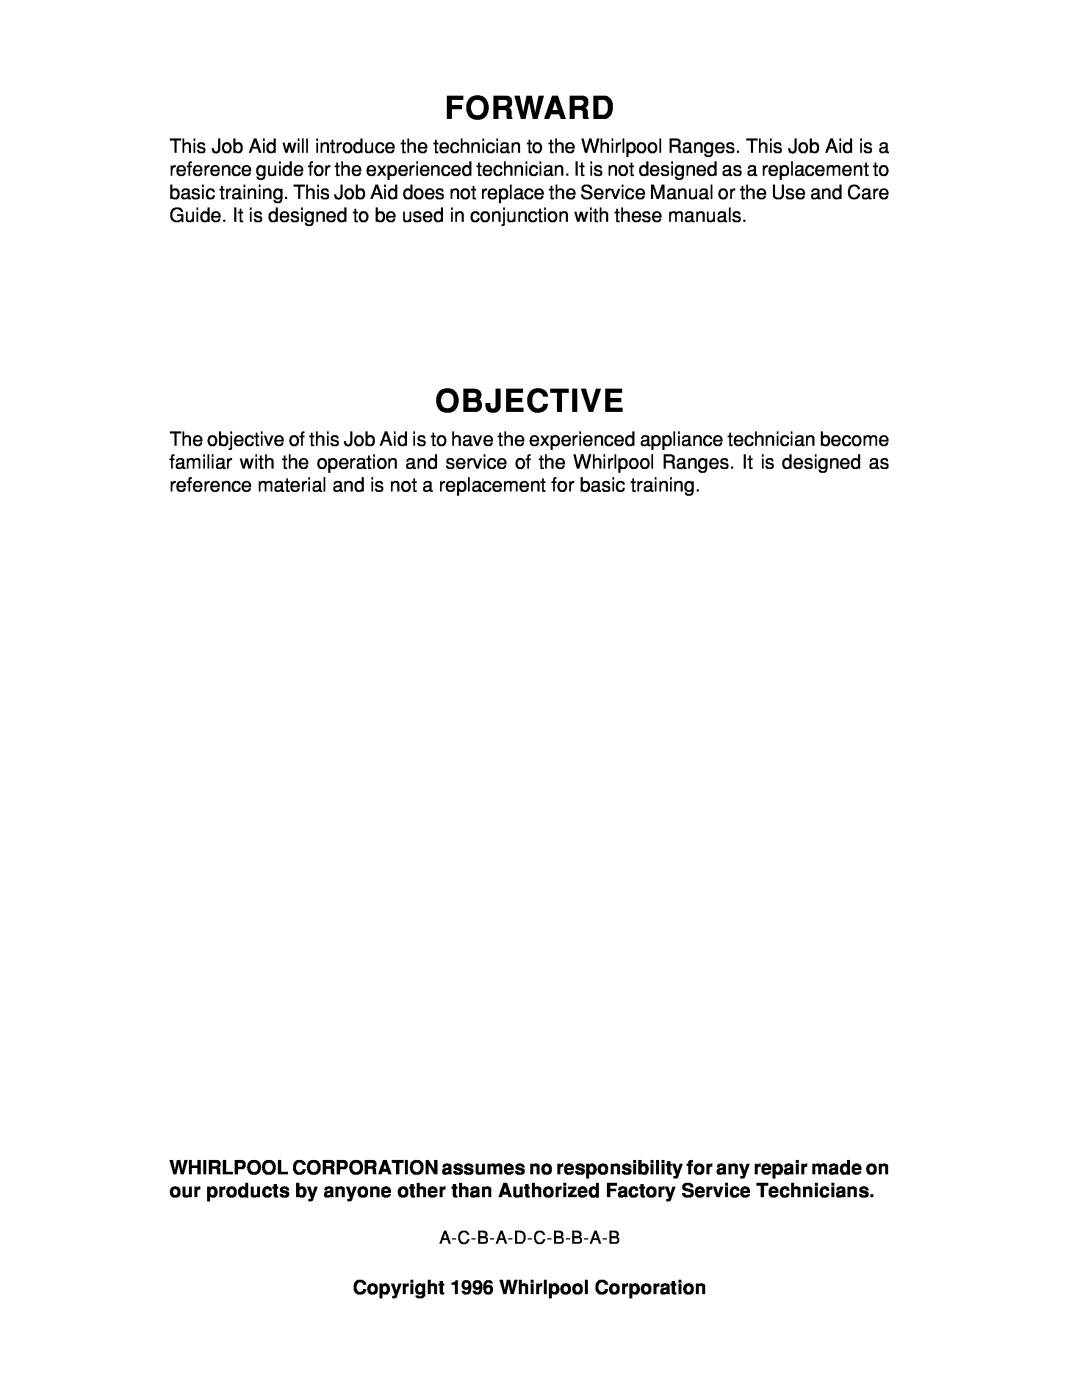 Whirlpool 465 manual Forward, Objective, Copyright 1996 Whirlpool Corporation 